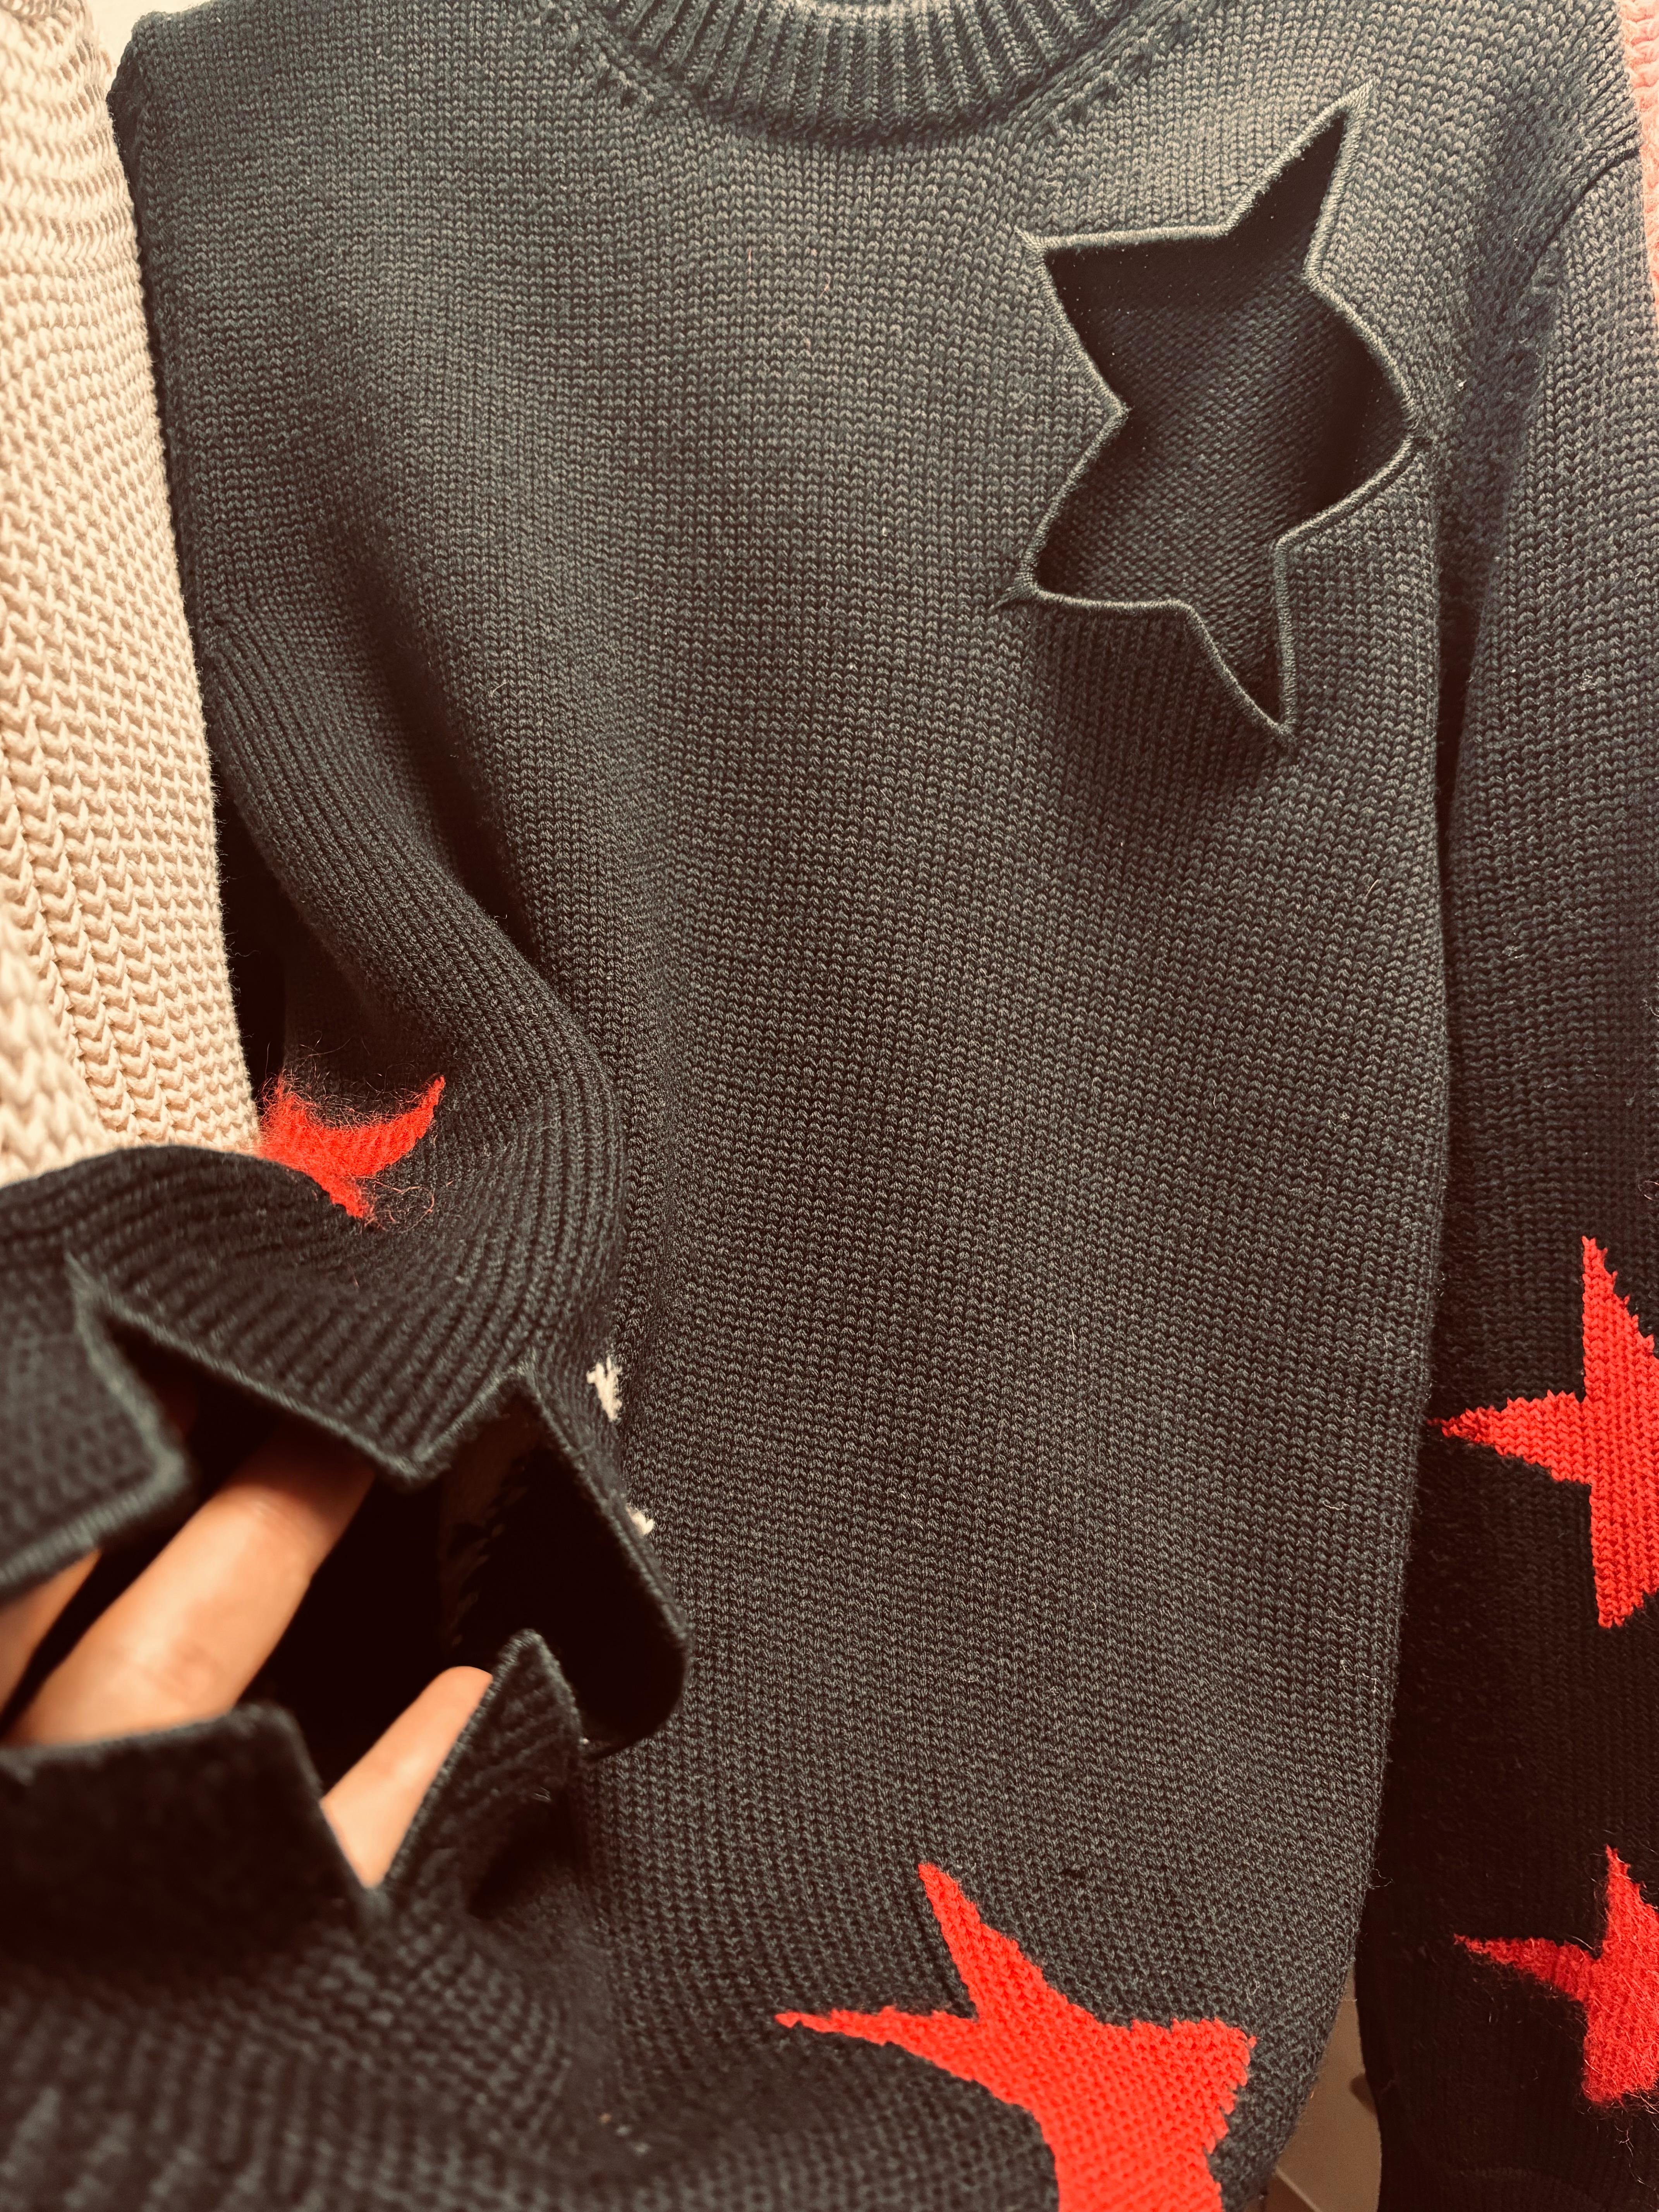 Givenchy Paris Herrenpullover AW17 Knit Stars Teil Cut-out, Größe S/M, S530 im Angebot 3